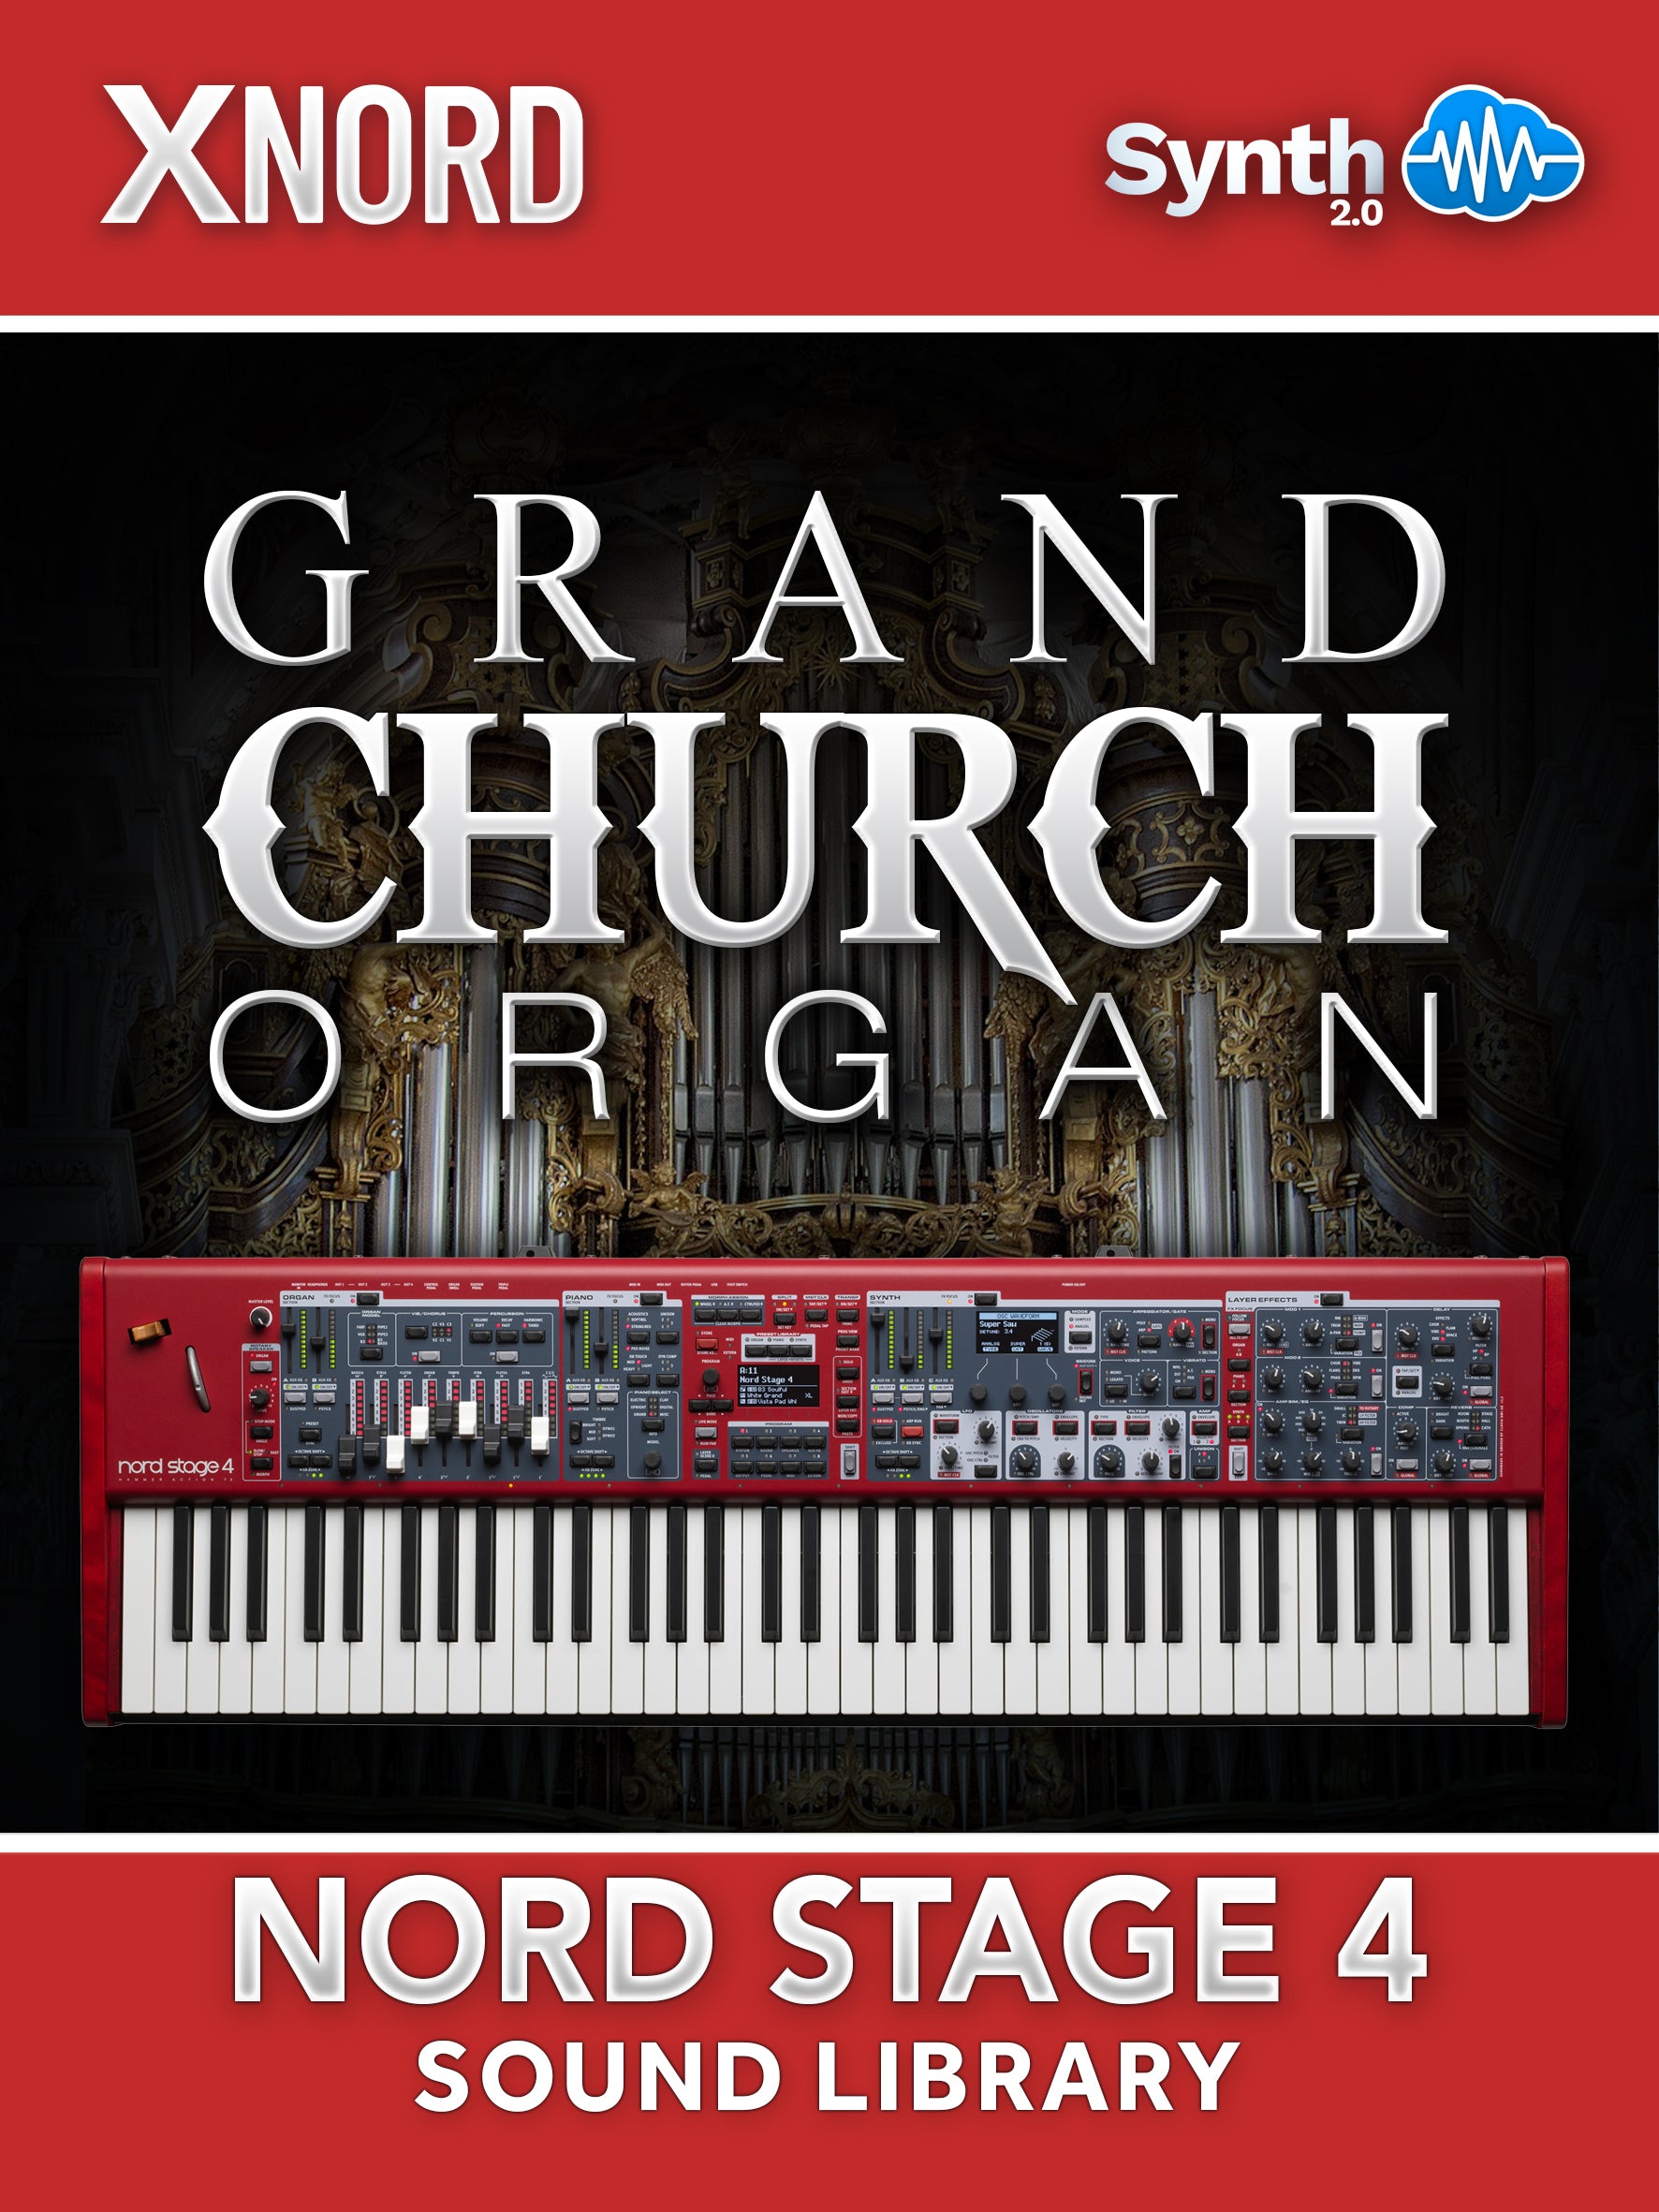 RCL015 - ( Bundle ) - Alessandria Organ + Grand Church Organ - Nord Stage 4